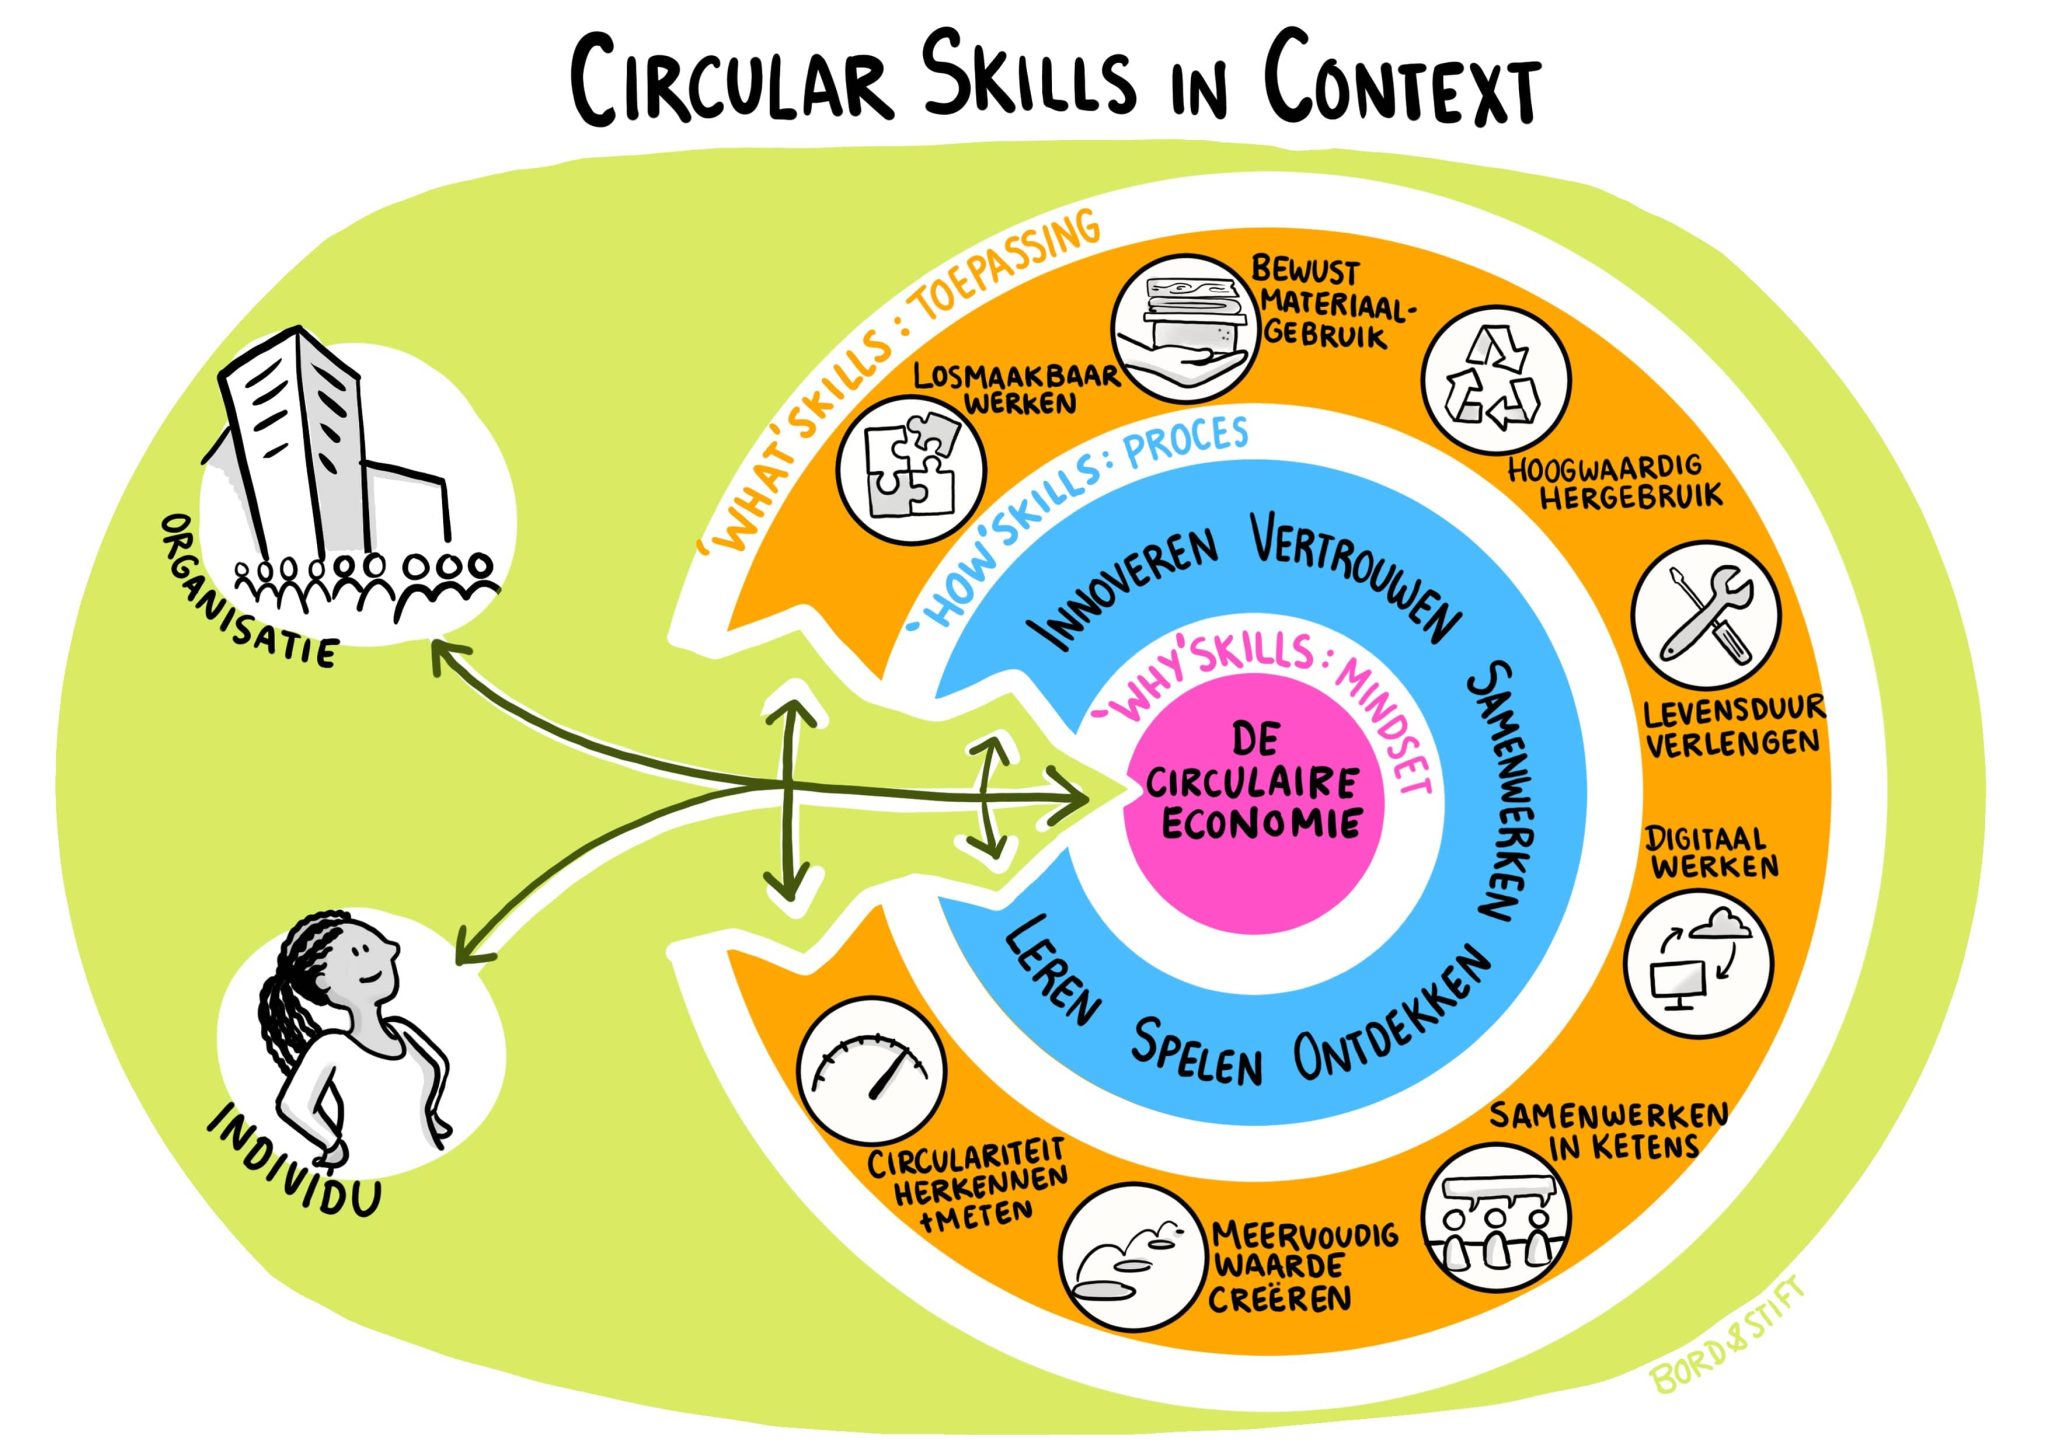 Circular skills in context